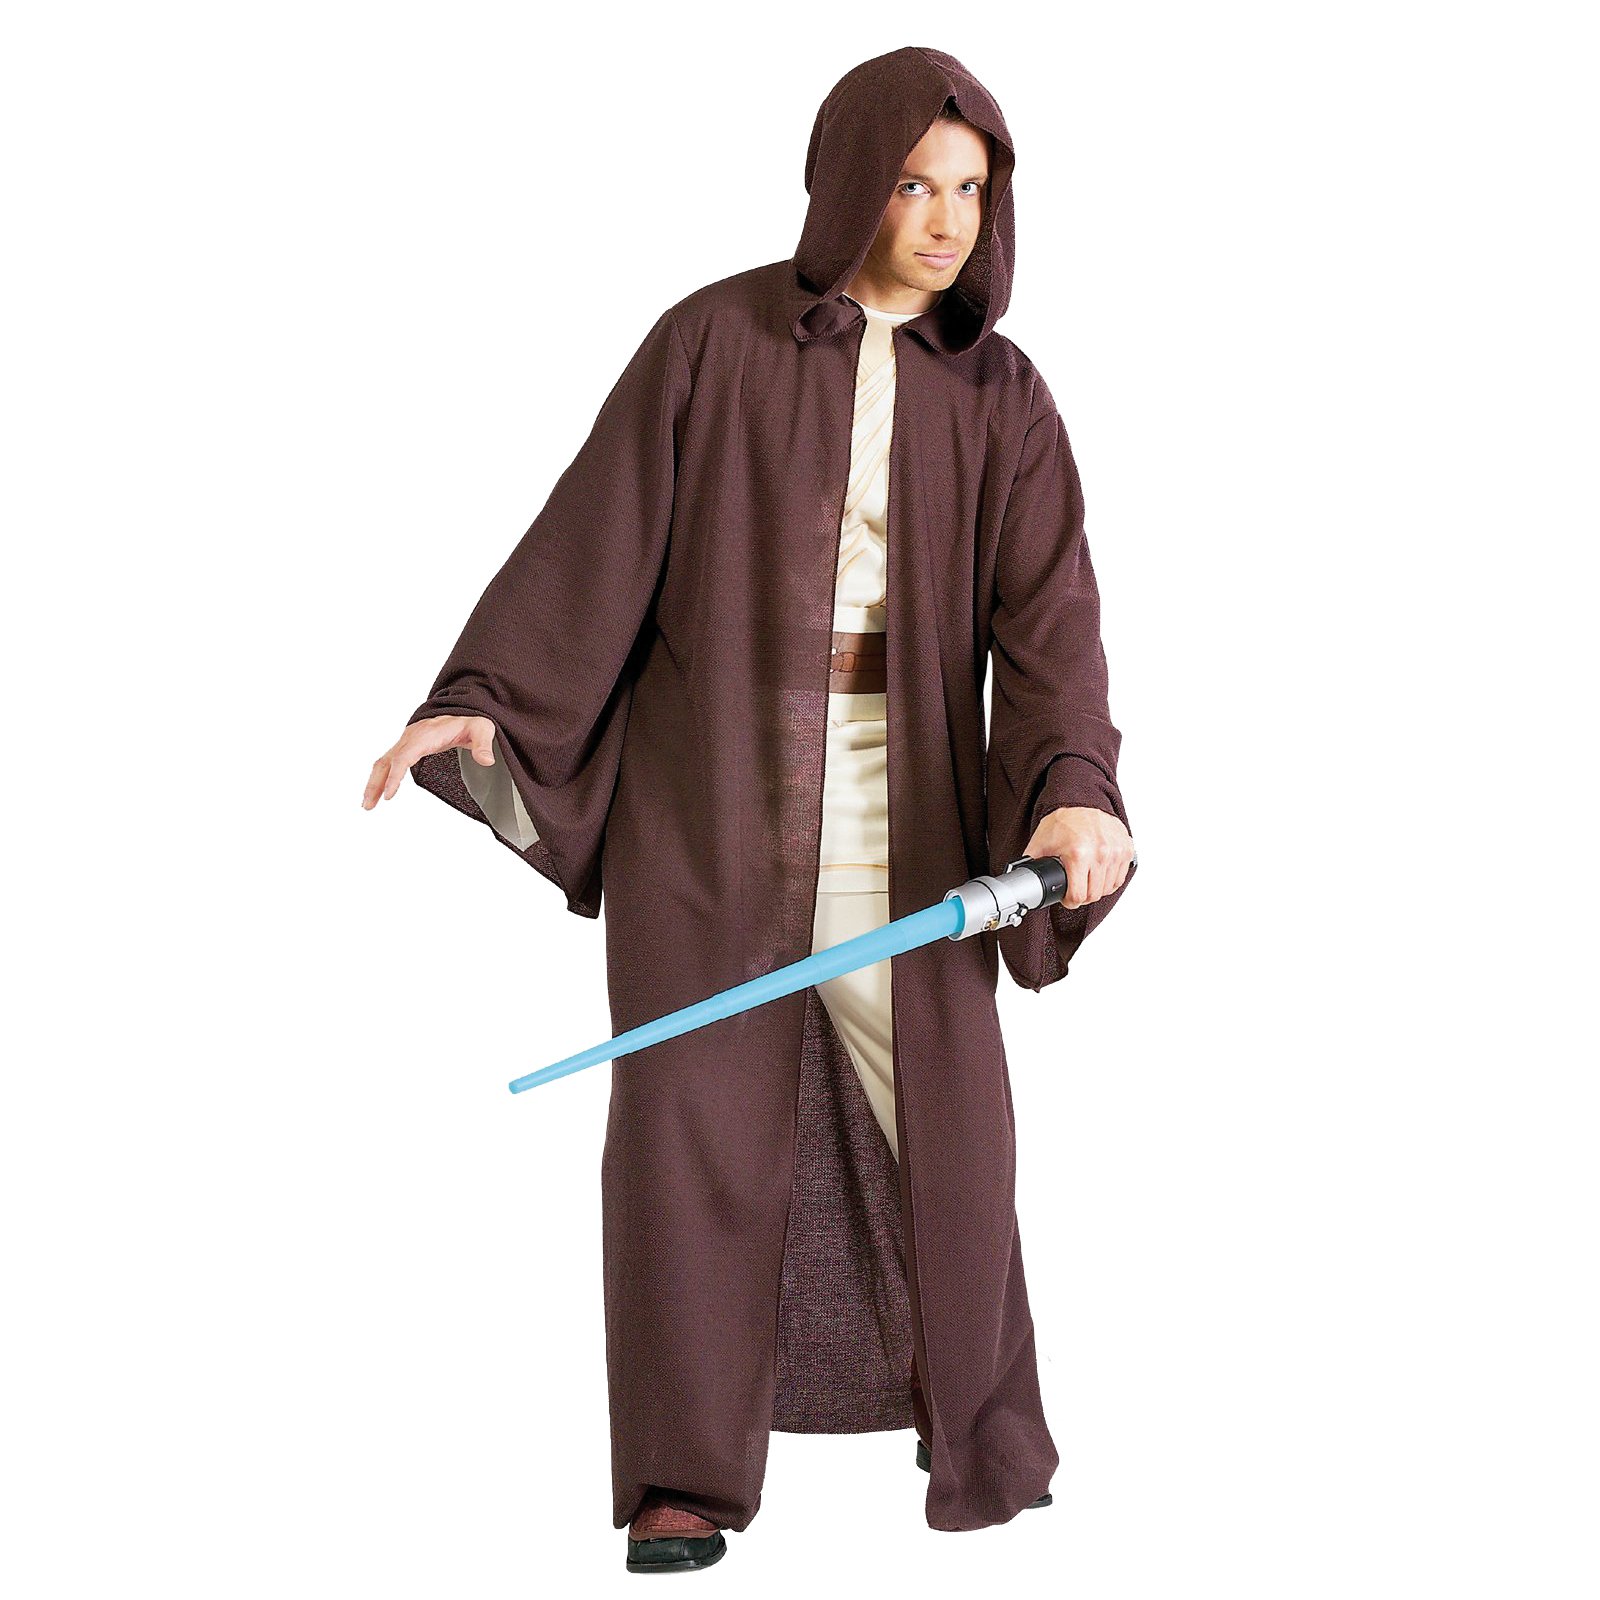 Star Wars - Jedi Robe Deluxe Adult Costume